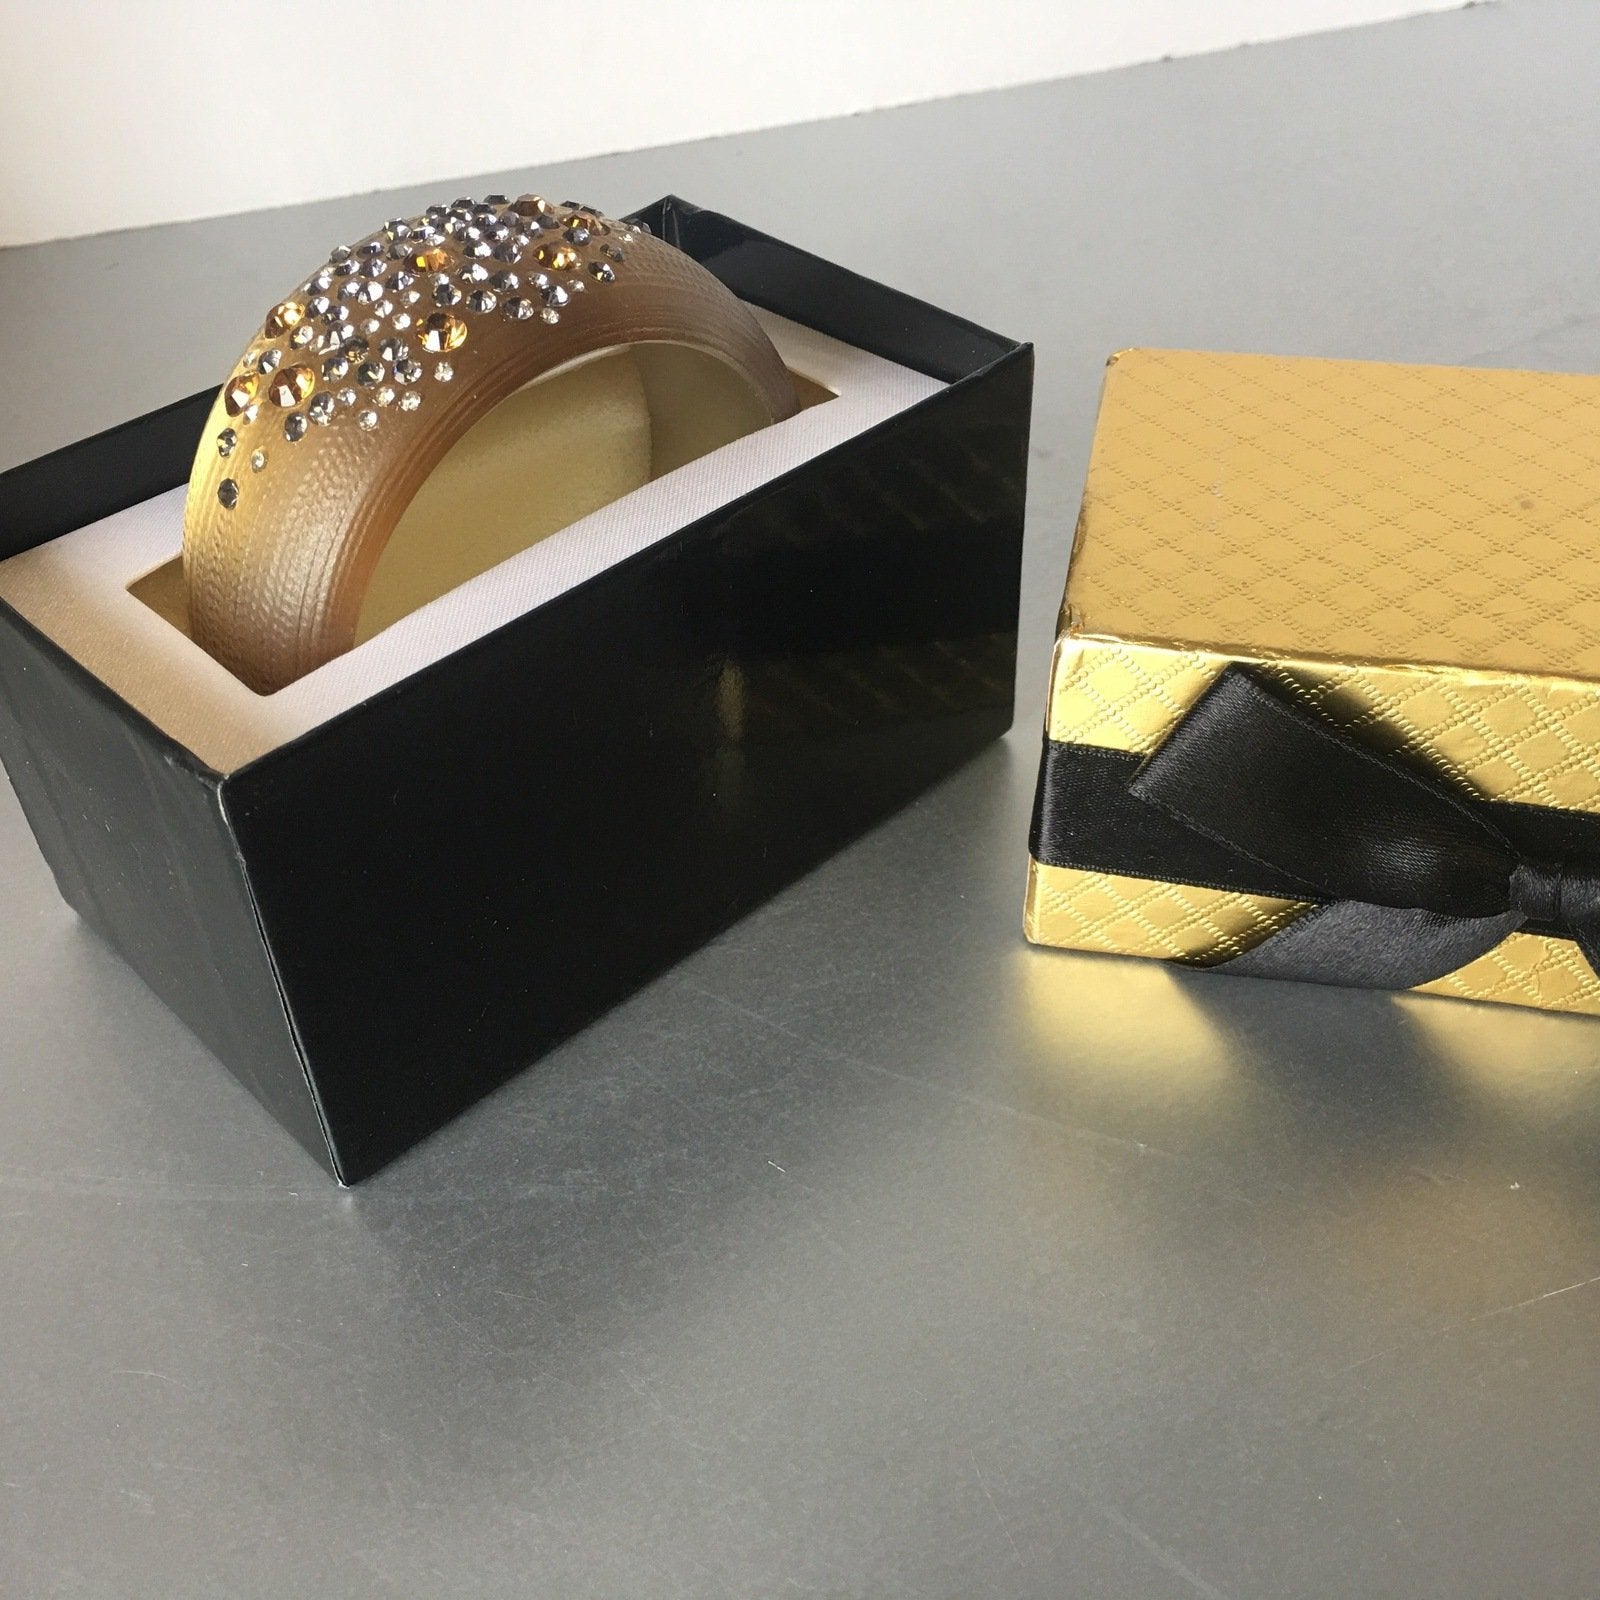 Iced Golden Brush Sparkling Bangle Bracelet Contemporary Plastic Jewelry